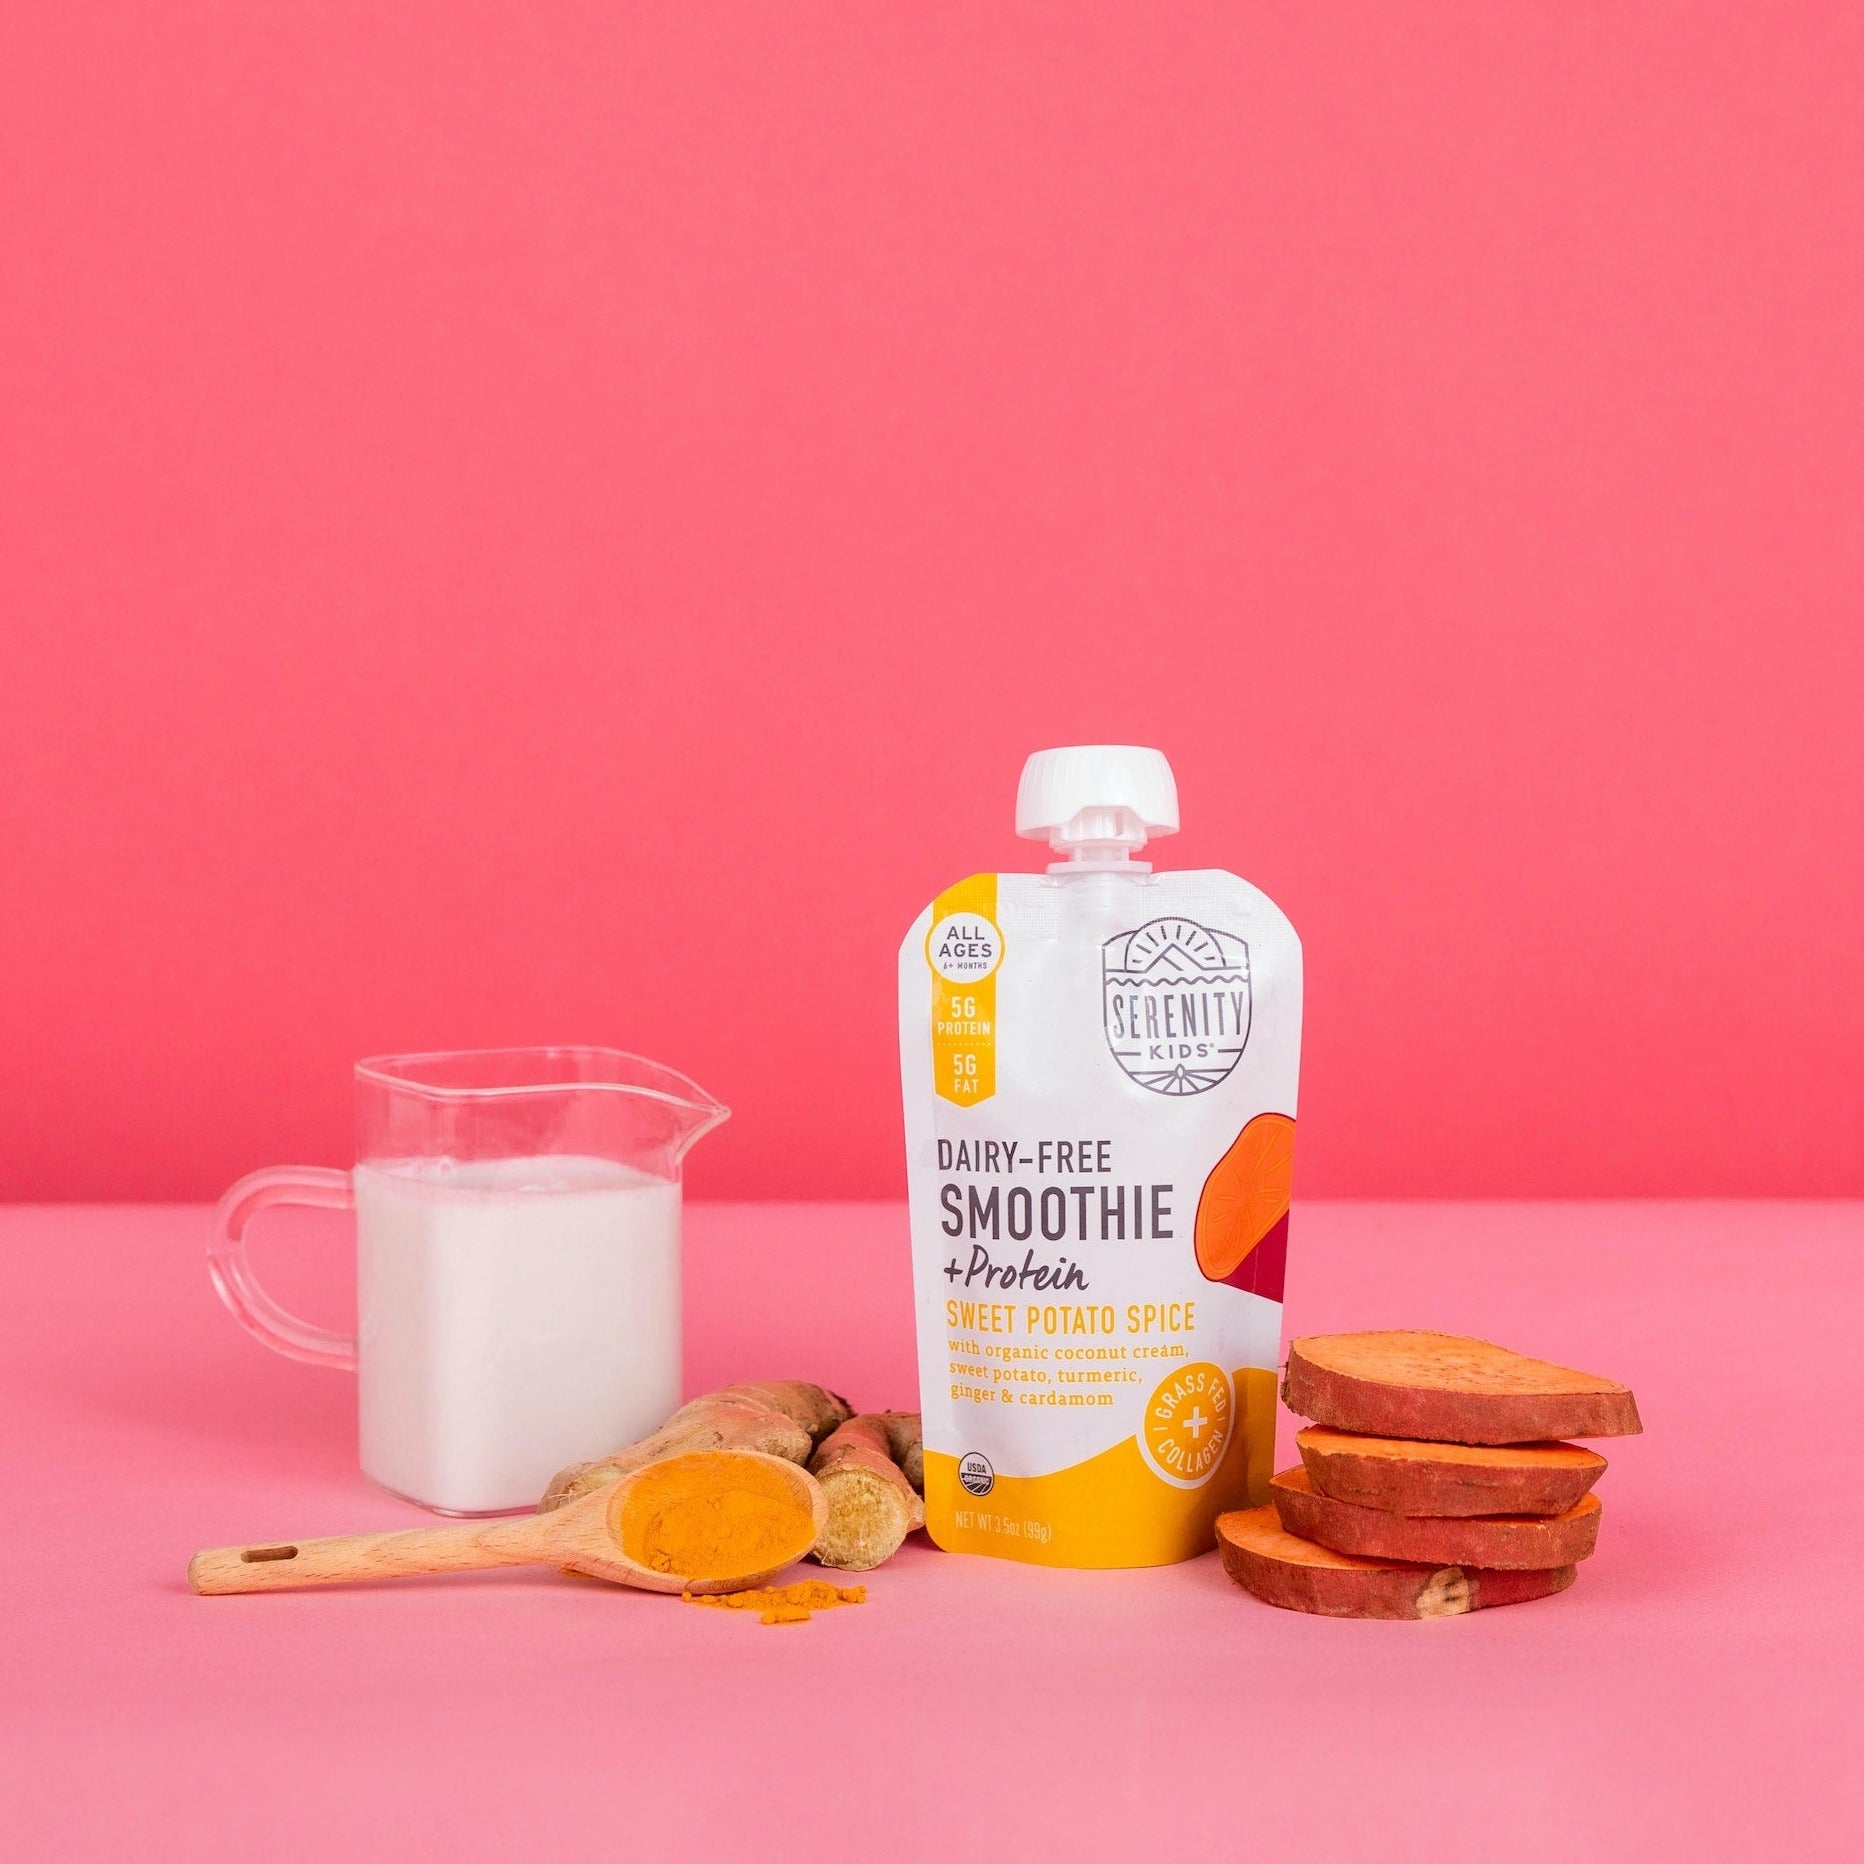 Sweet Potato Spice Dairy-Free Smoothie + Protein - Serenity Kids - Smoothie Pouch